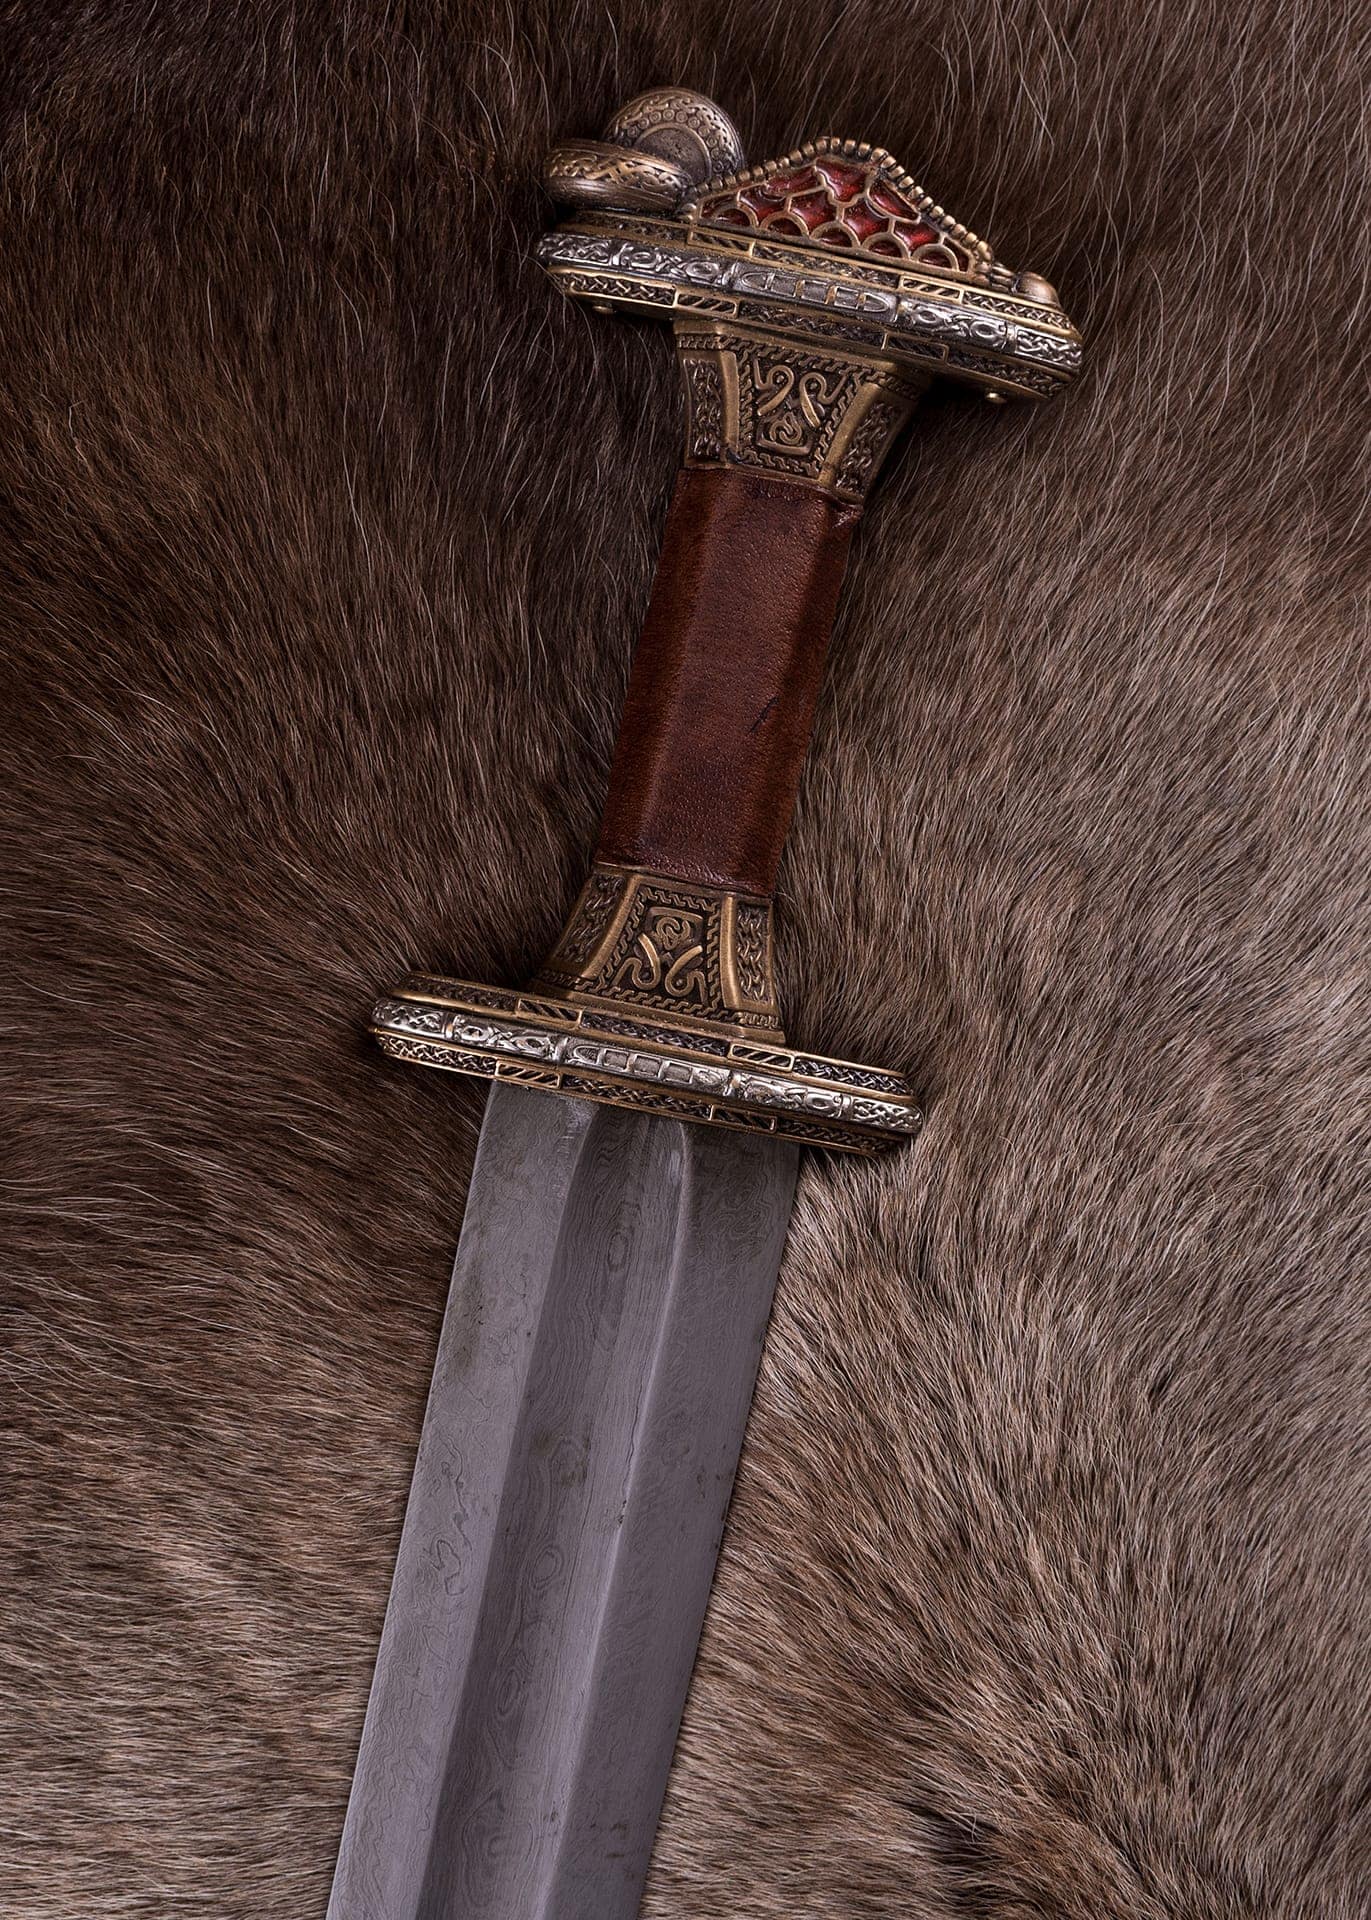 Espada vikinga de Haithabu, siglo IX, acero de Damasco 0116041401